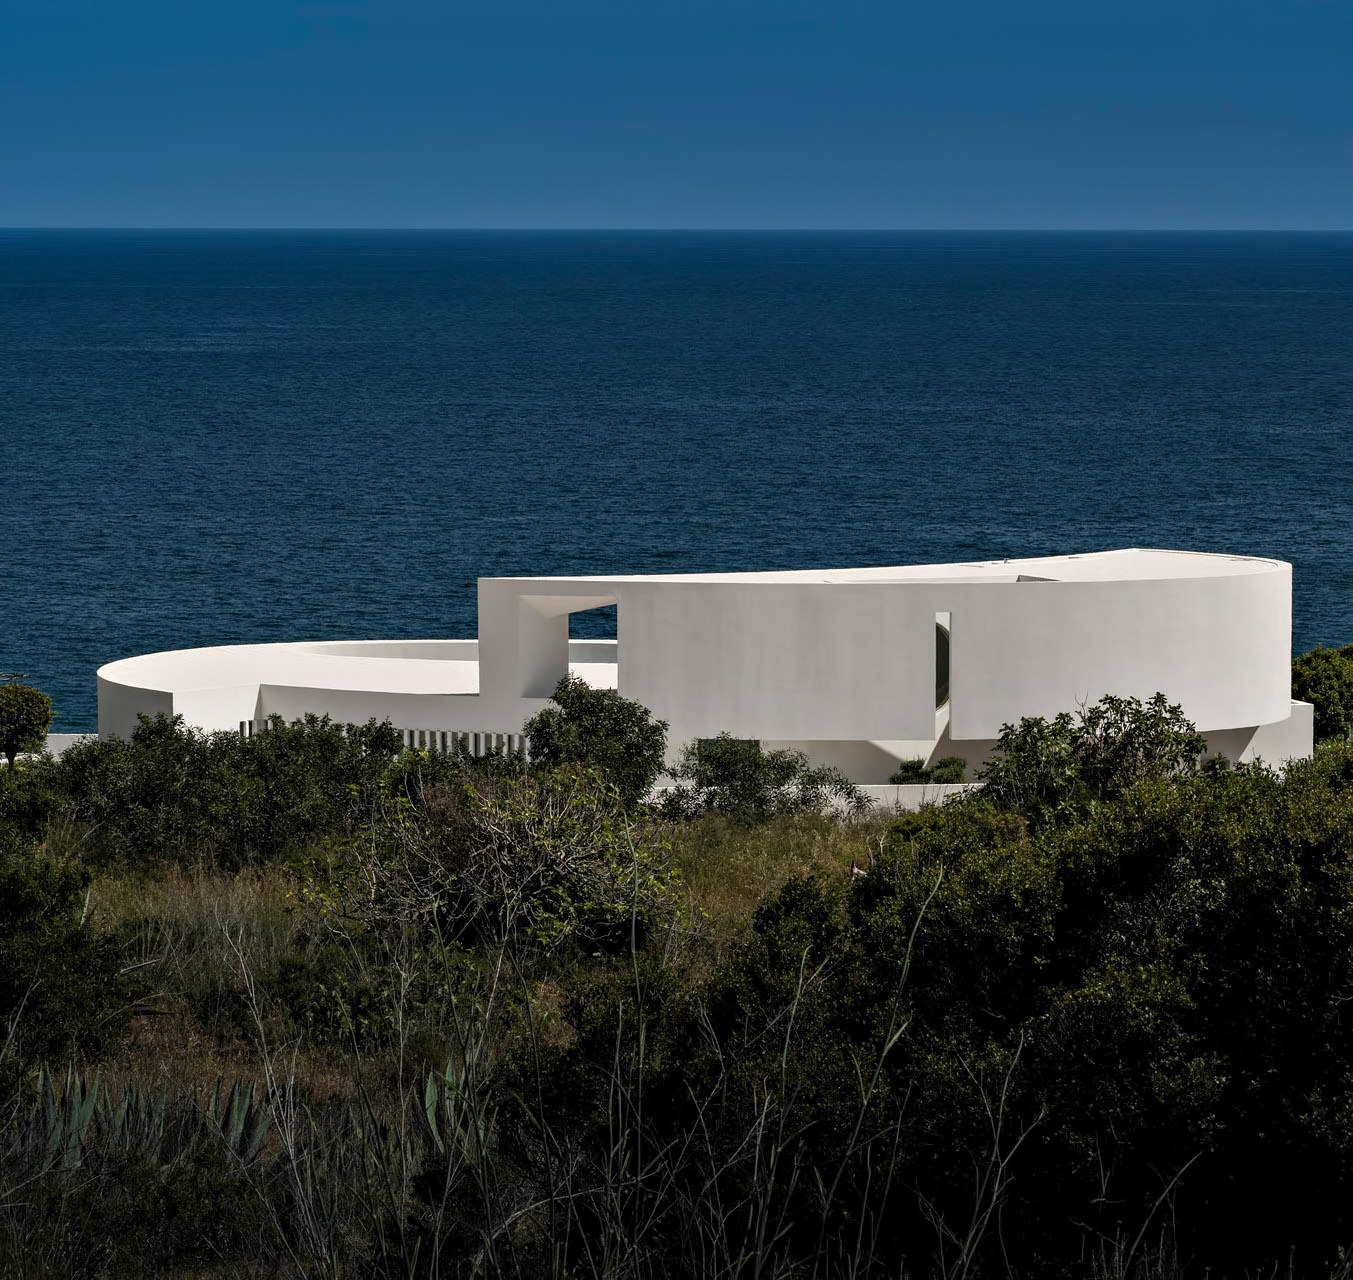 Casa Eliptica Luxury Residence - Praia da Luz, Algarve, Portugal